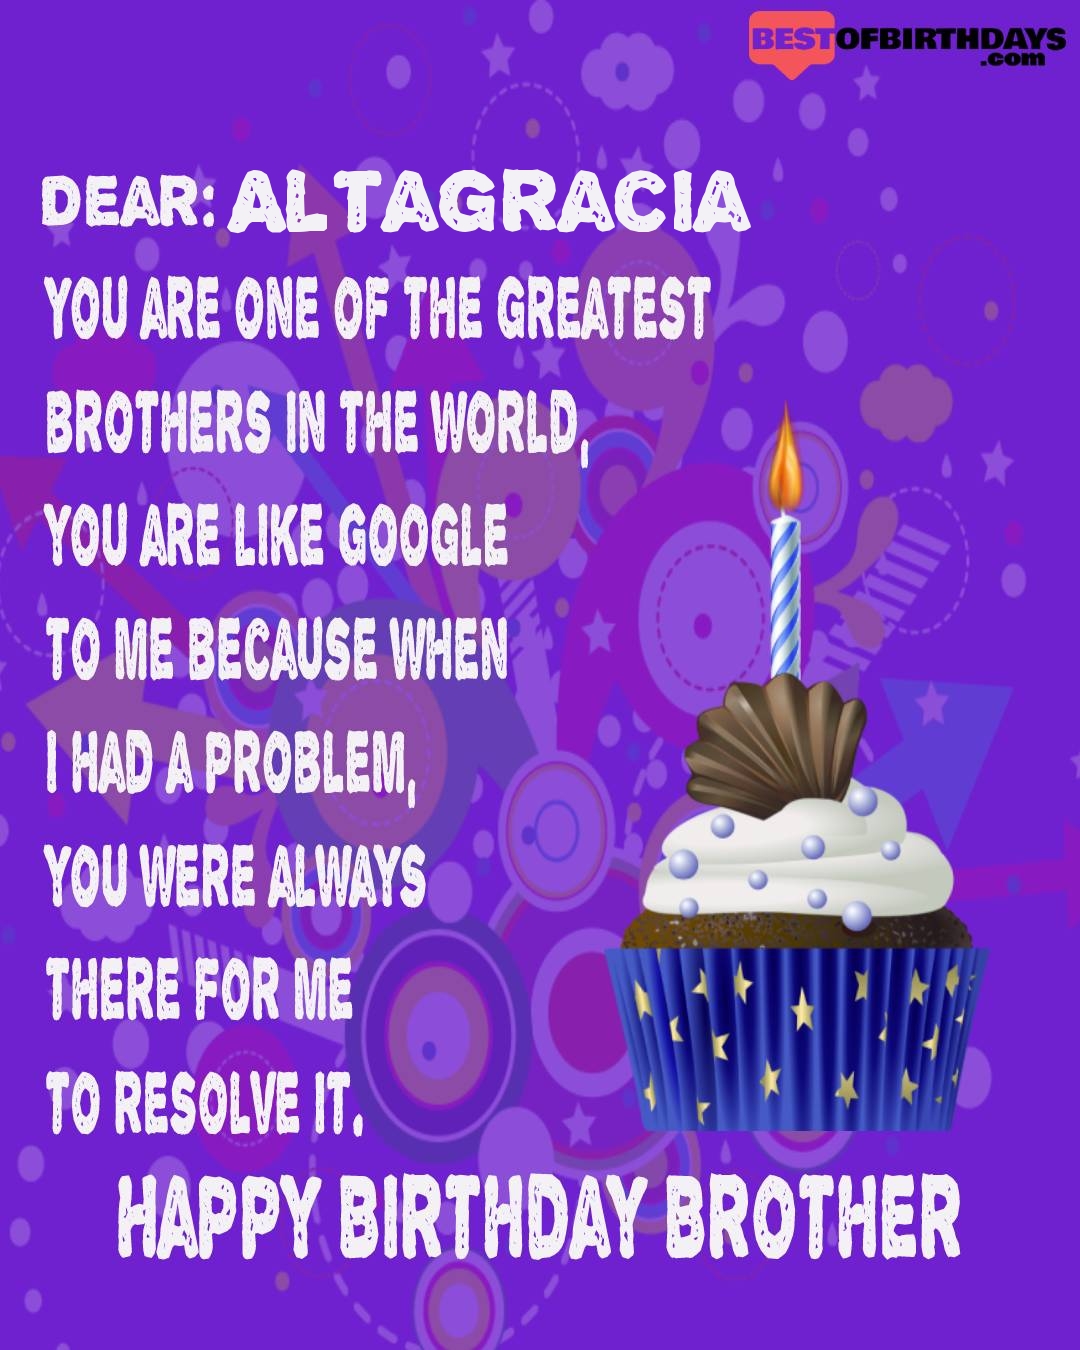 Happy birthday altagracia bhai brother bro